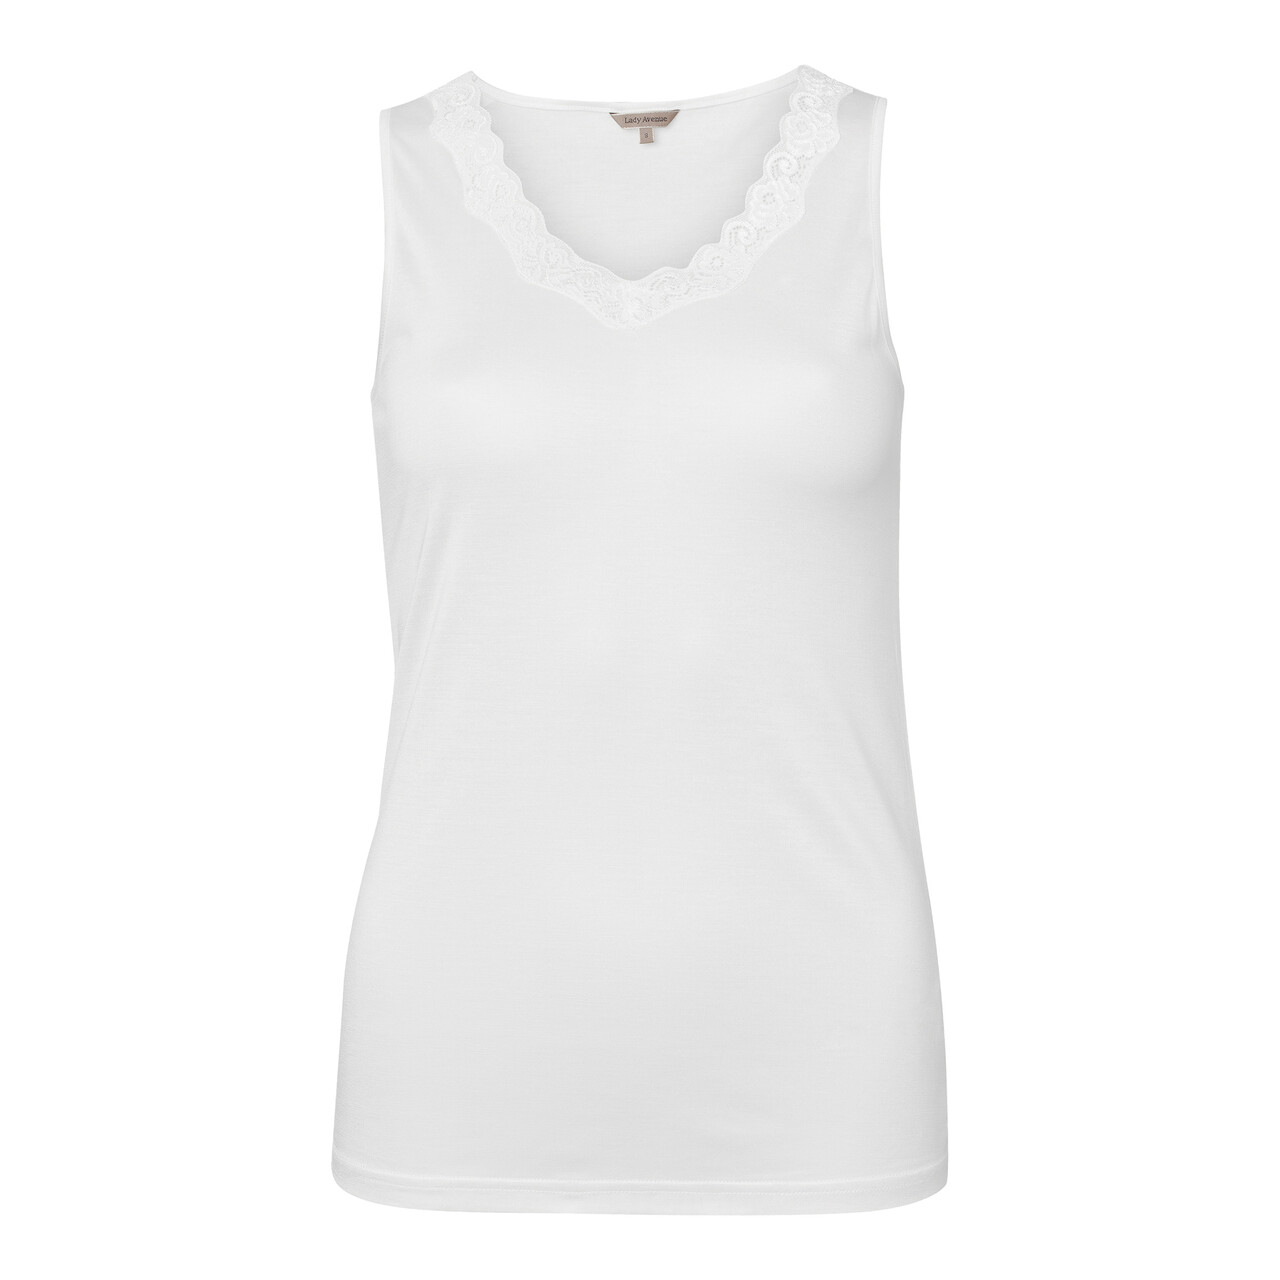 Lady Avenue Silk Jersey Top, Farve: Hvid, Størrelse: XS, Dame